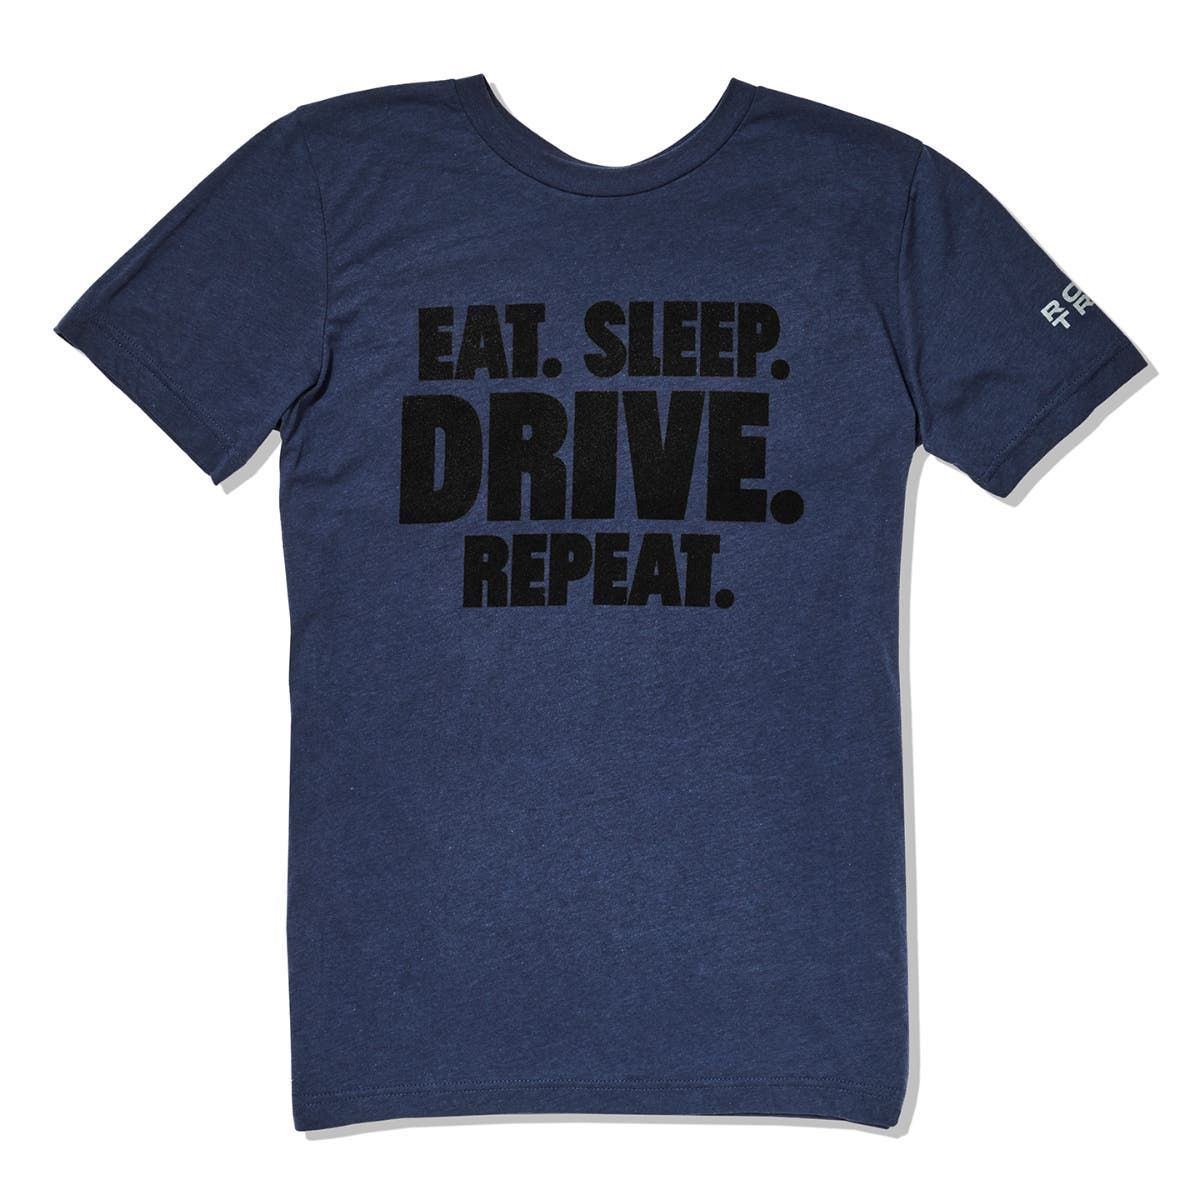 Eat. Sleep. Drive. Repeat.